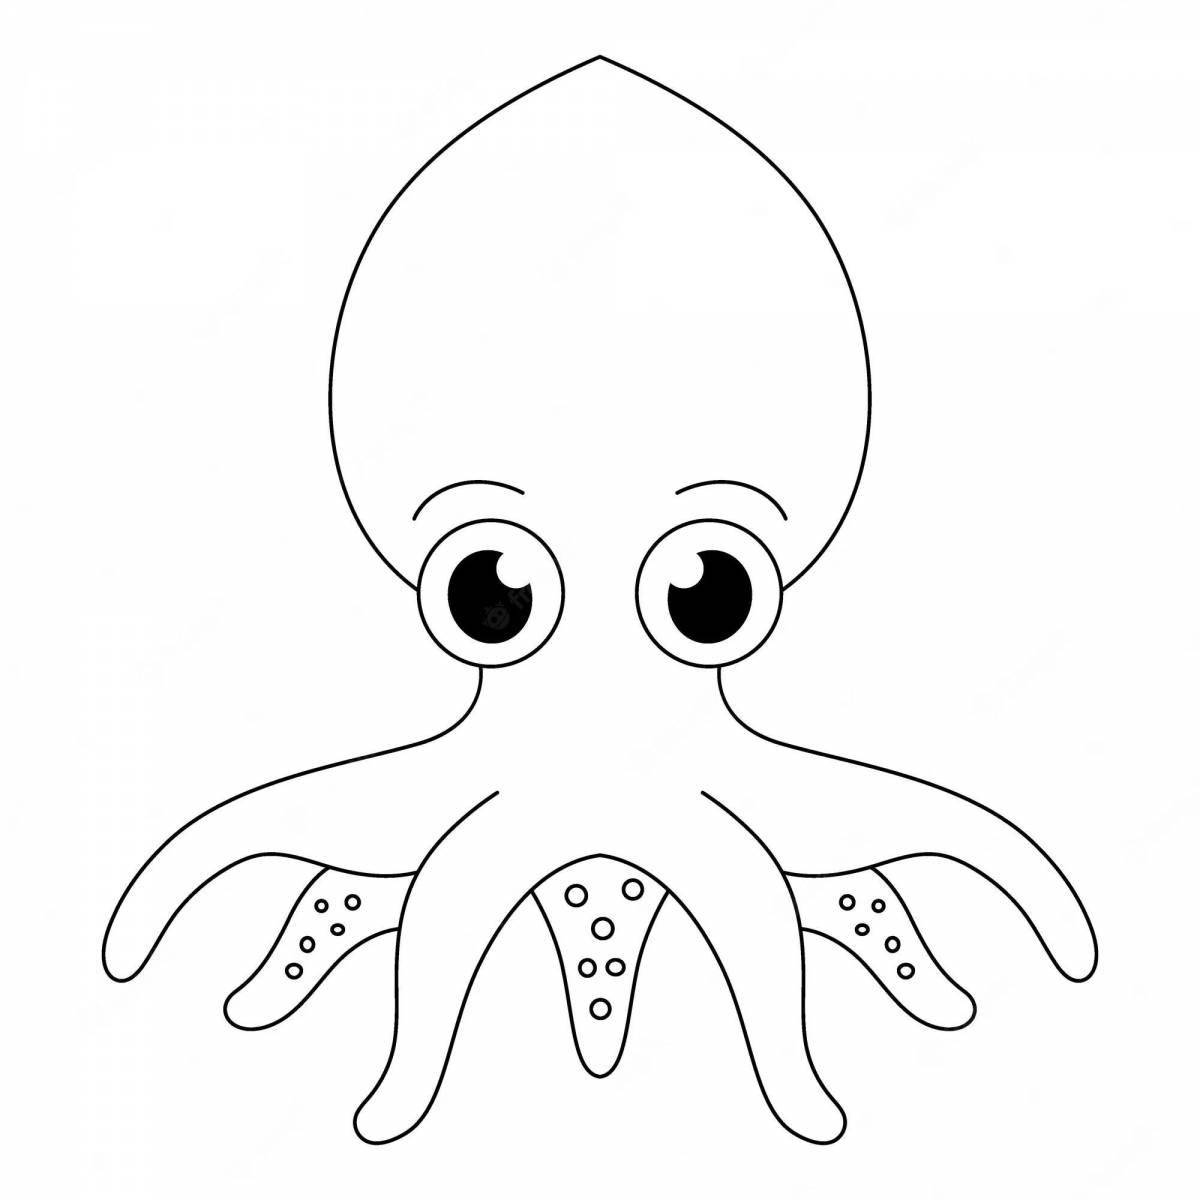 Fantastic octopus coloring book for kids